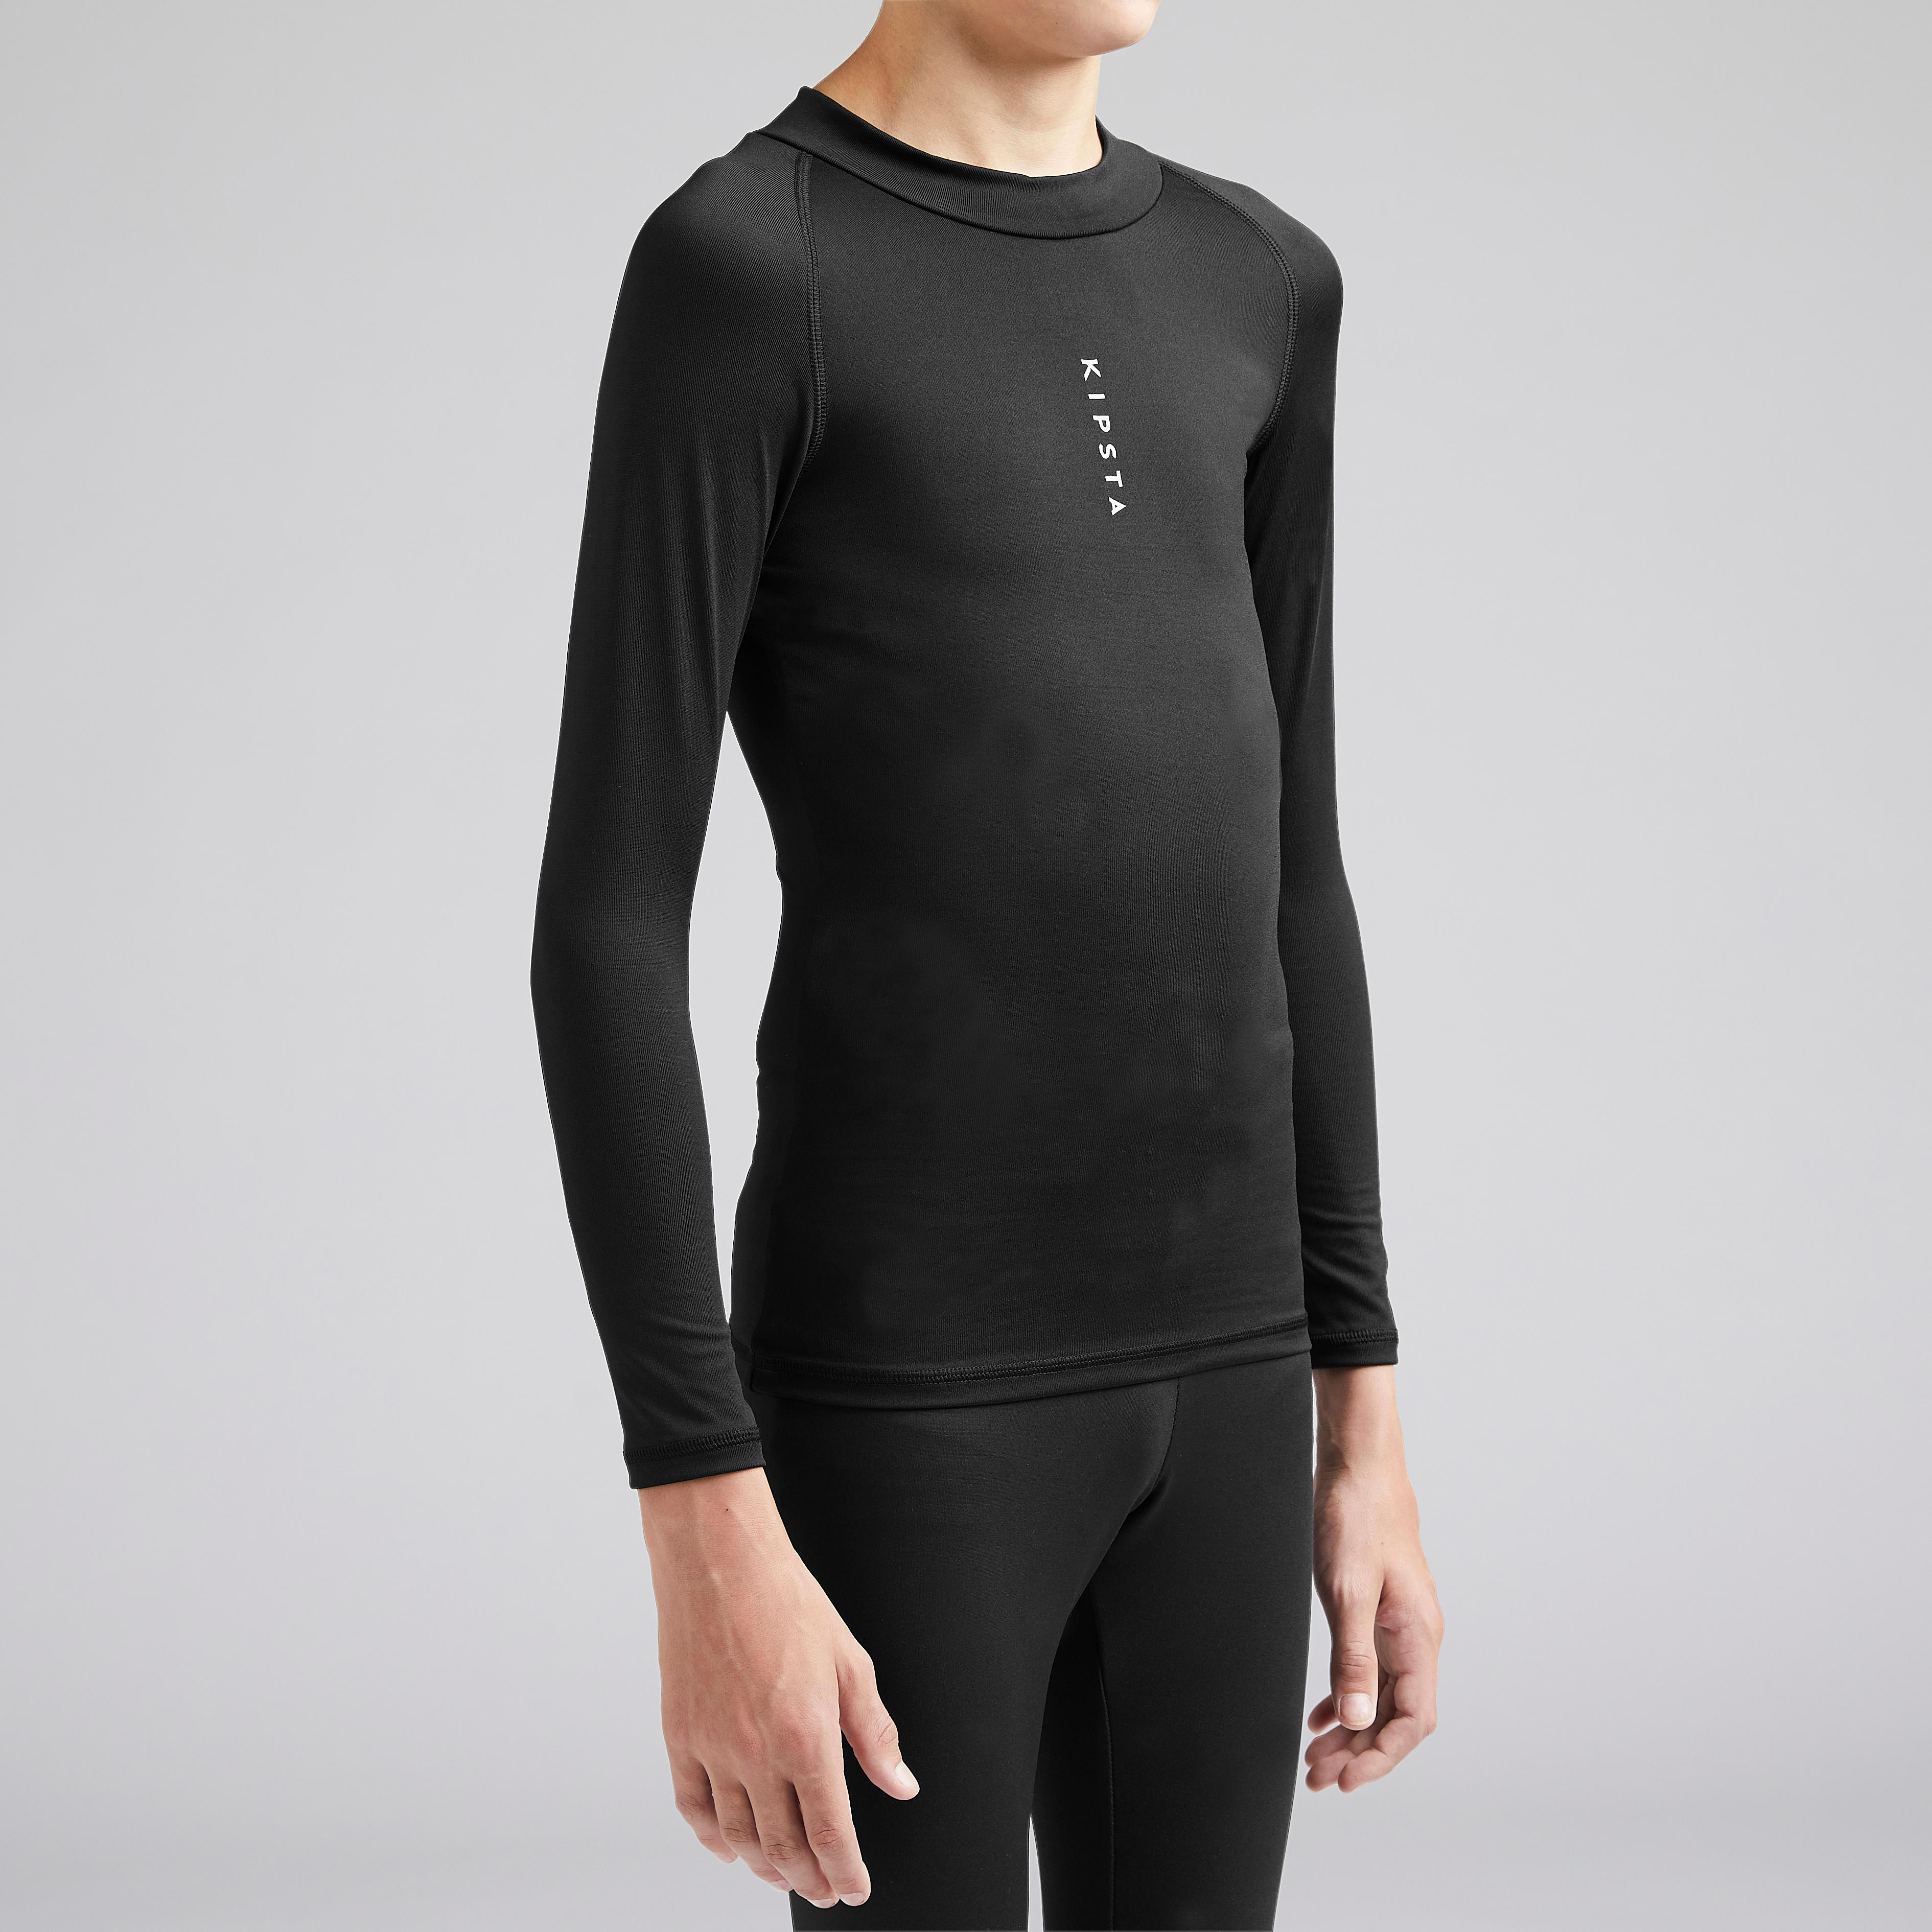 Buy ReDesign Apparels Men's Slim Fit Nylon Reflective Sports Pant  (HTptdPANTcmp_Black_S) at Amazon.in